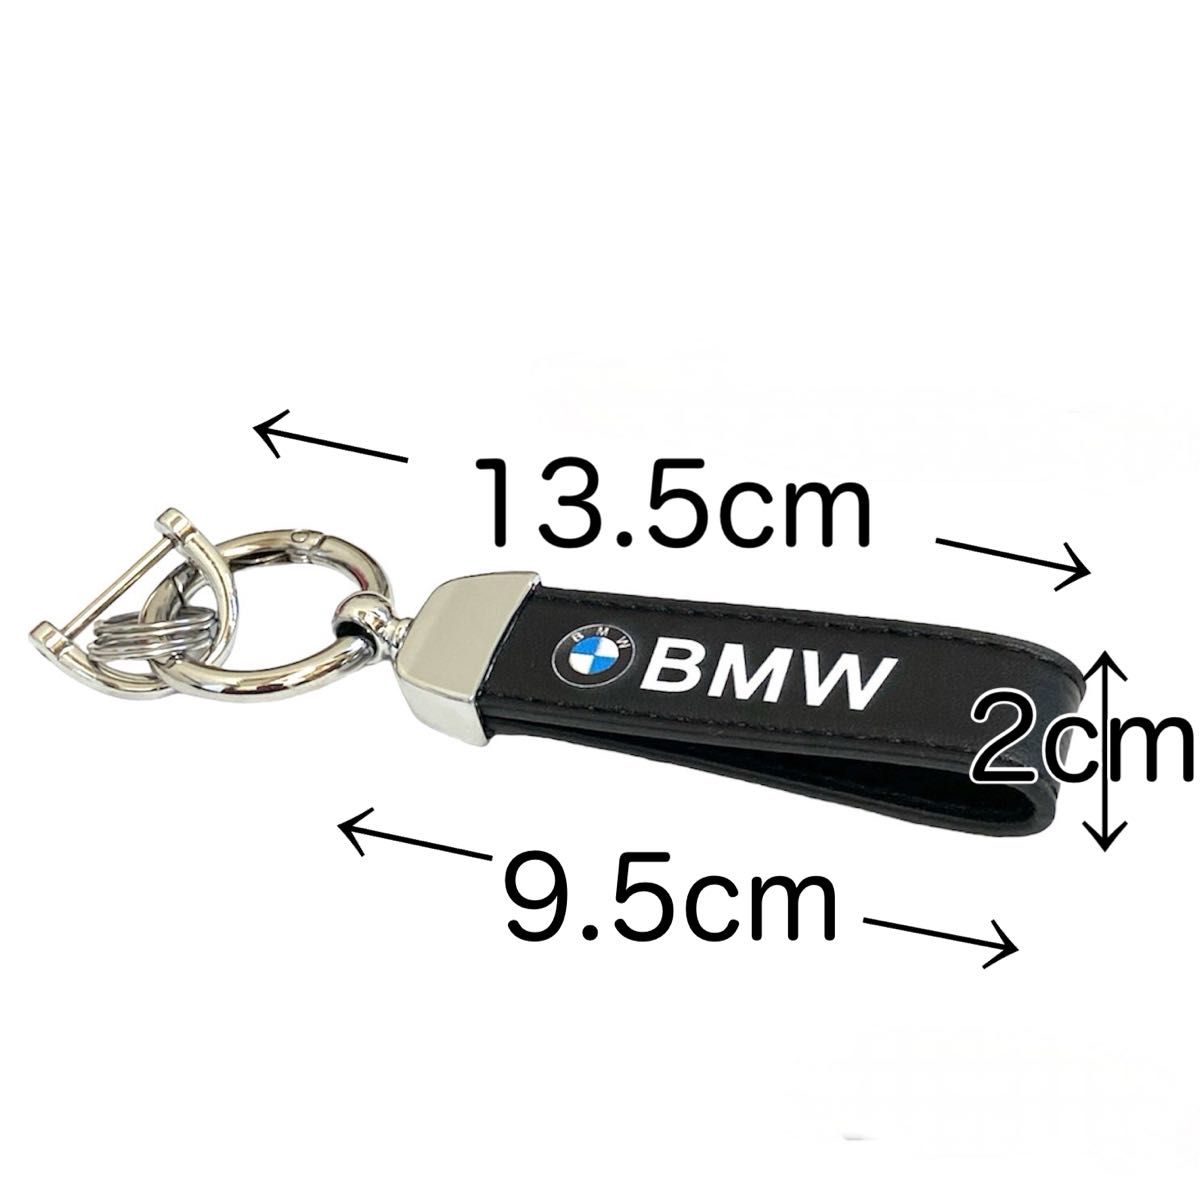 BMW キーホルダー 黒 bmw アクセサリー 用品 グッズ コレクション